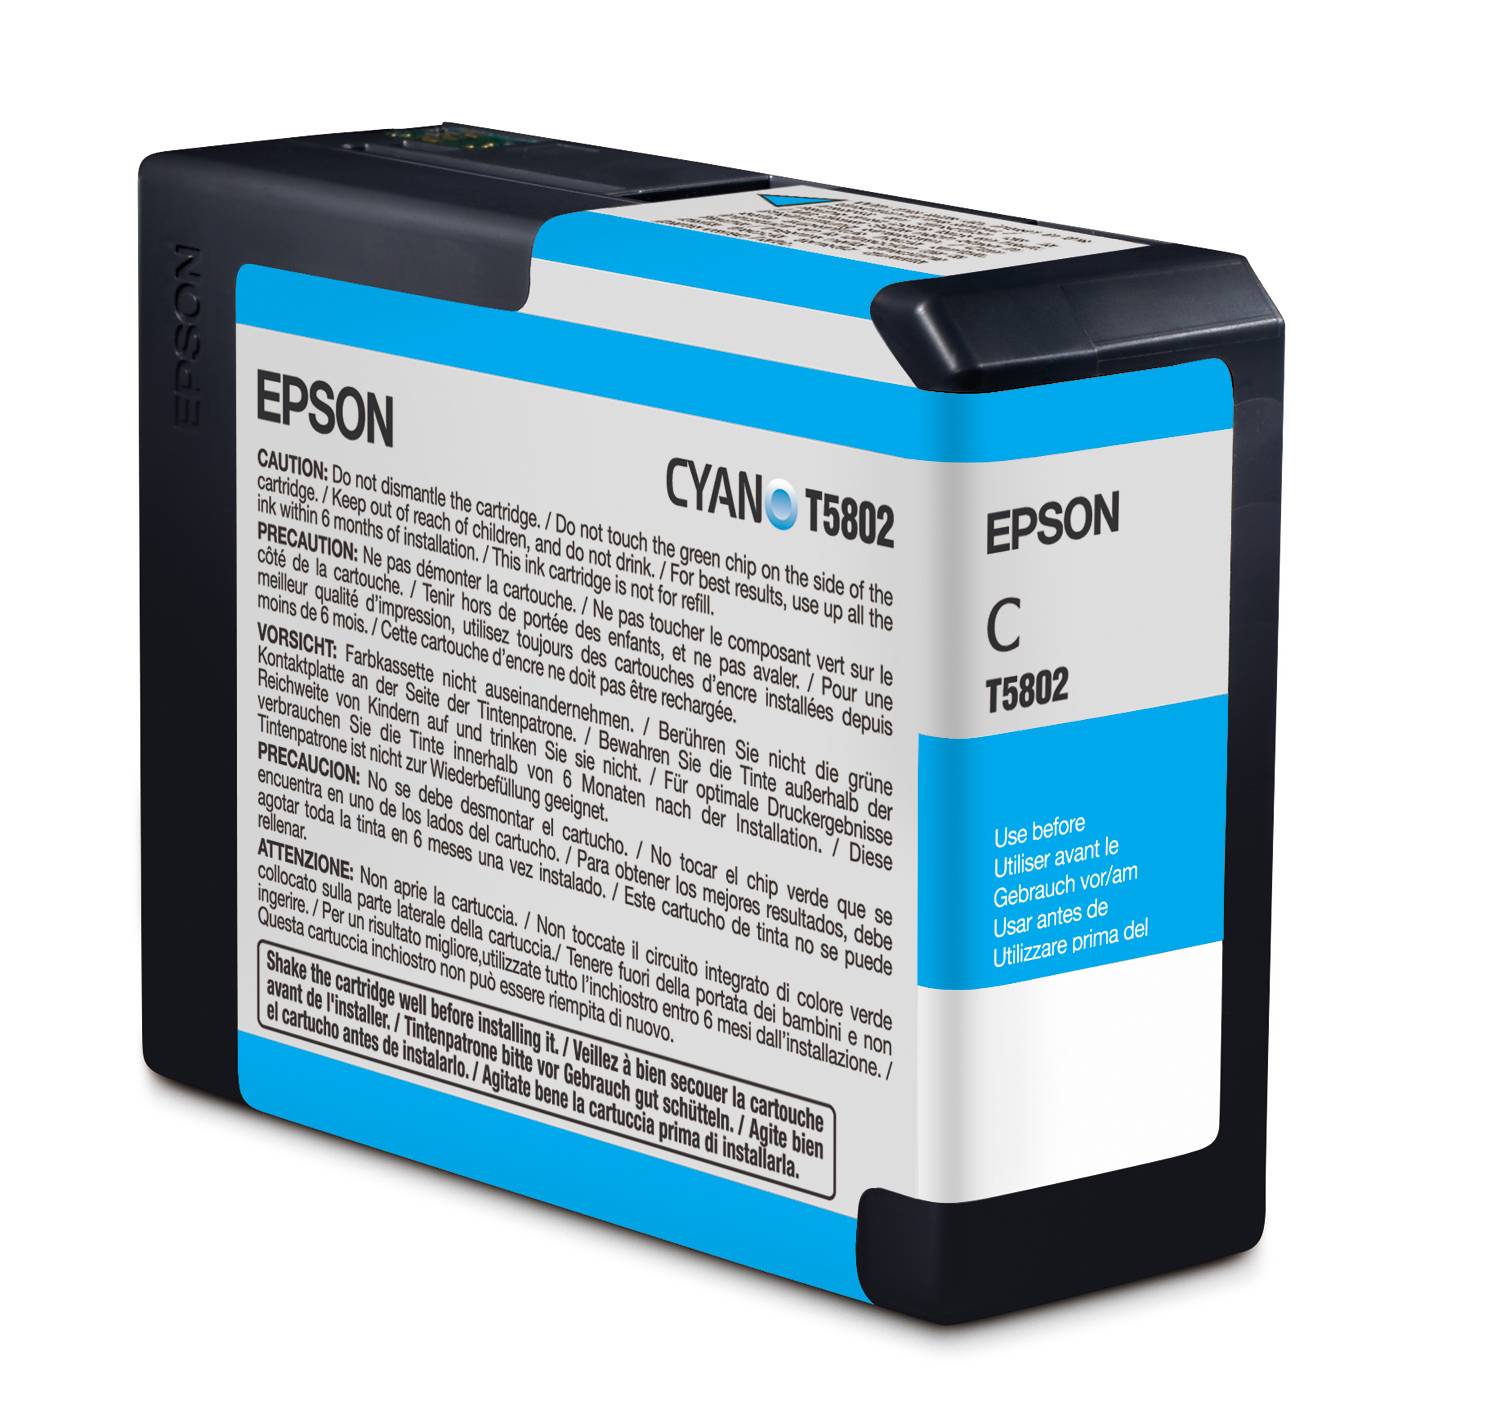 Epson T580 Cyan UltraChrome K3 Ink Cartridge (80 ml Capacity)